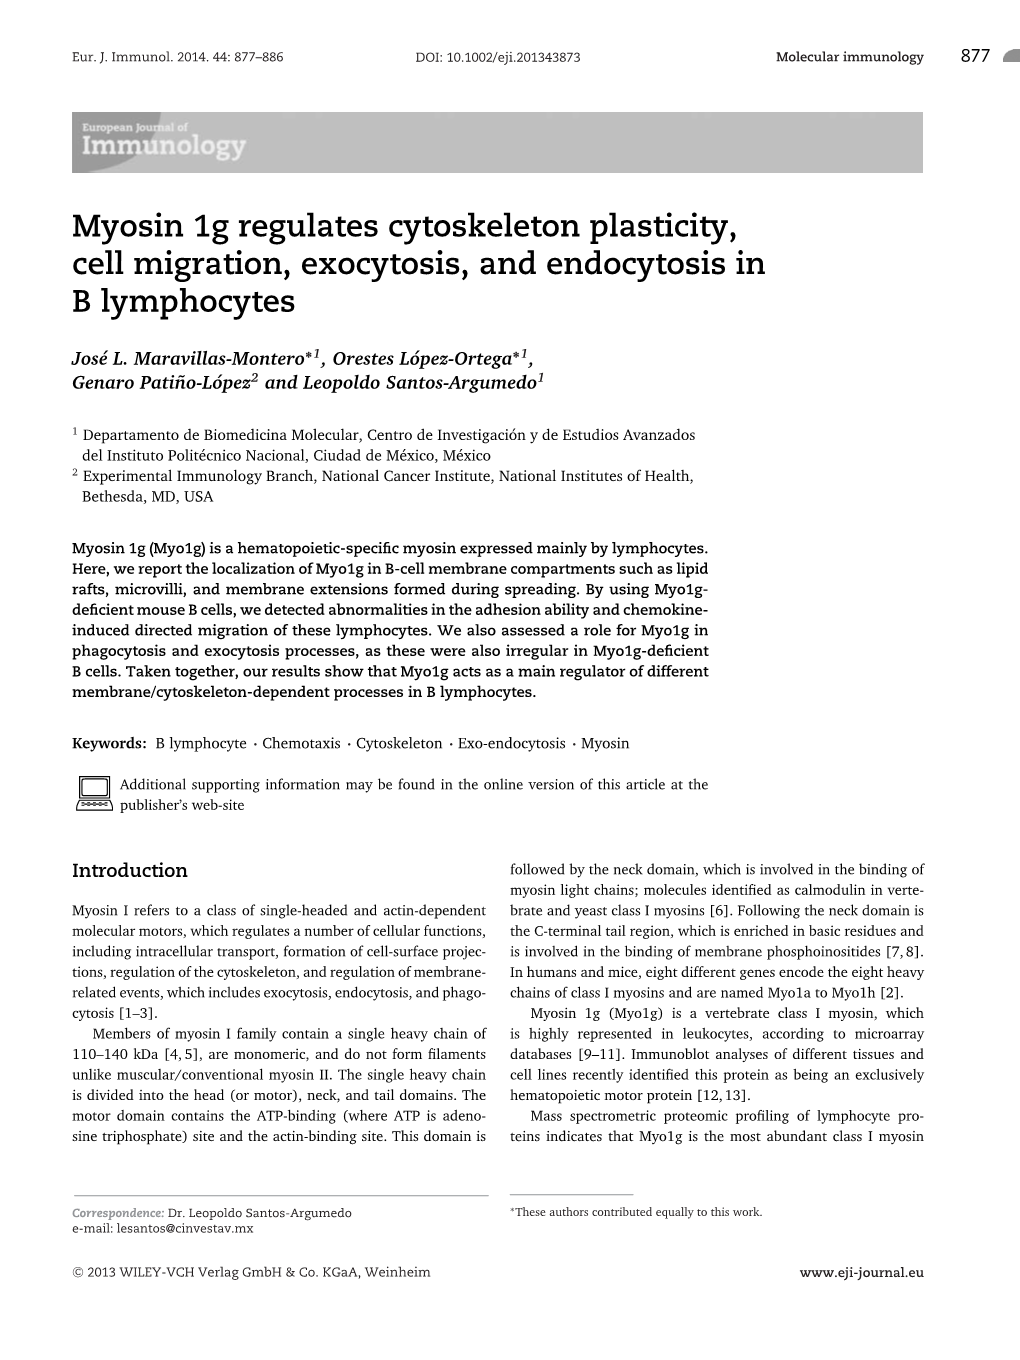 Myosin 1G Regulates Cytoskeleton Plasticity, Cell Migration, Exocytosis, and Endocytosis in B Lymphocytes